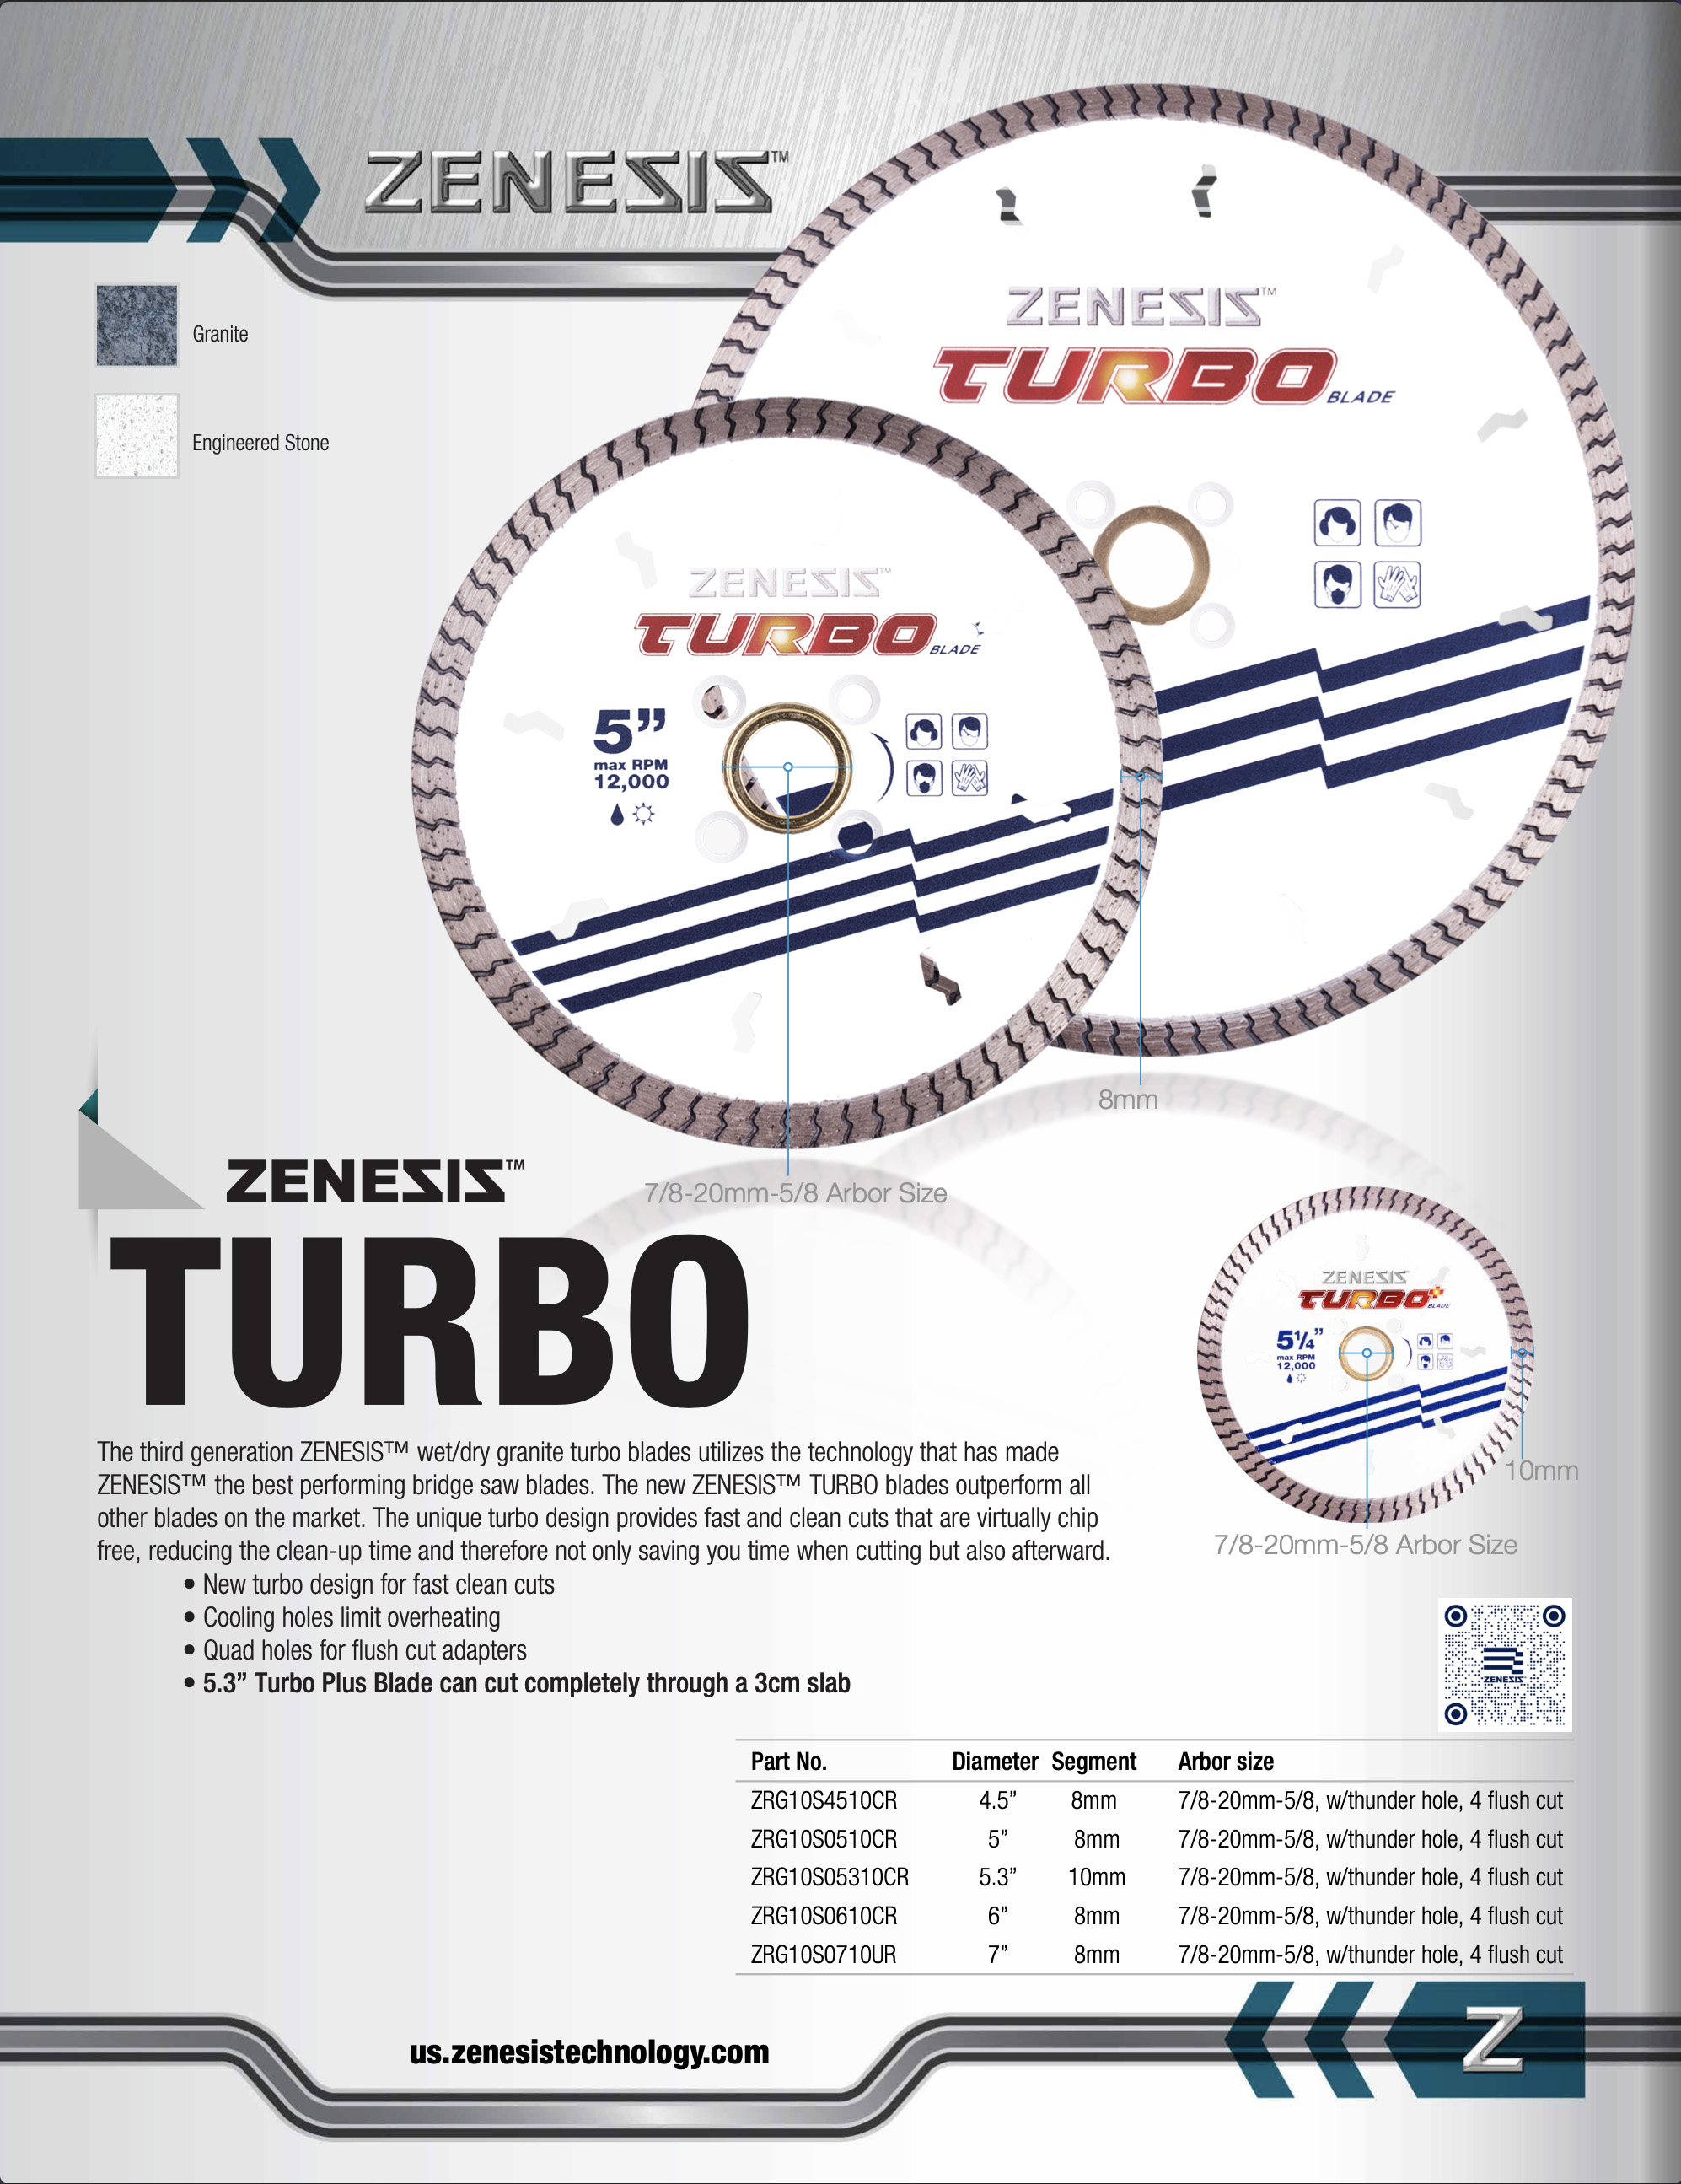 ZENESIS™ Turbo